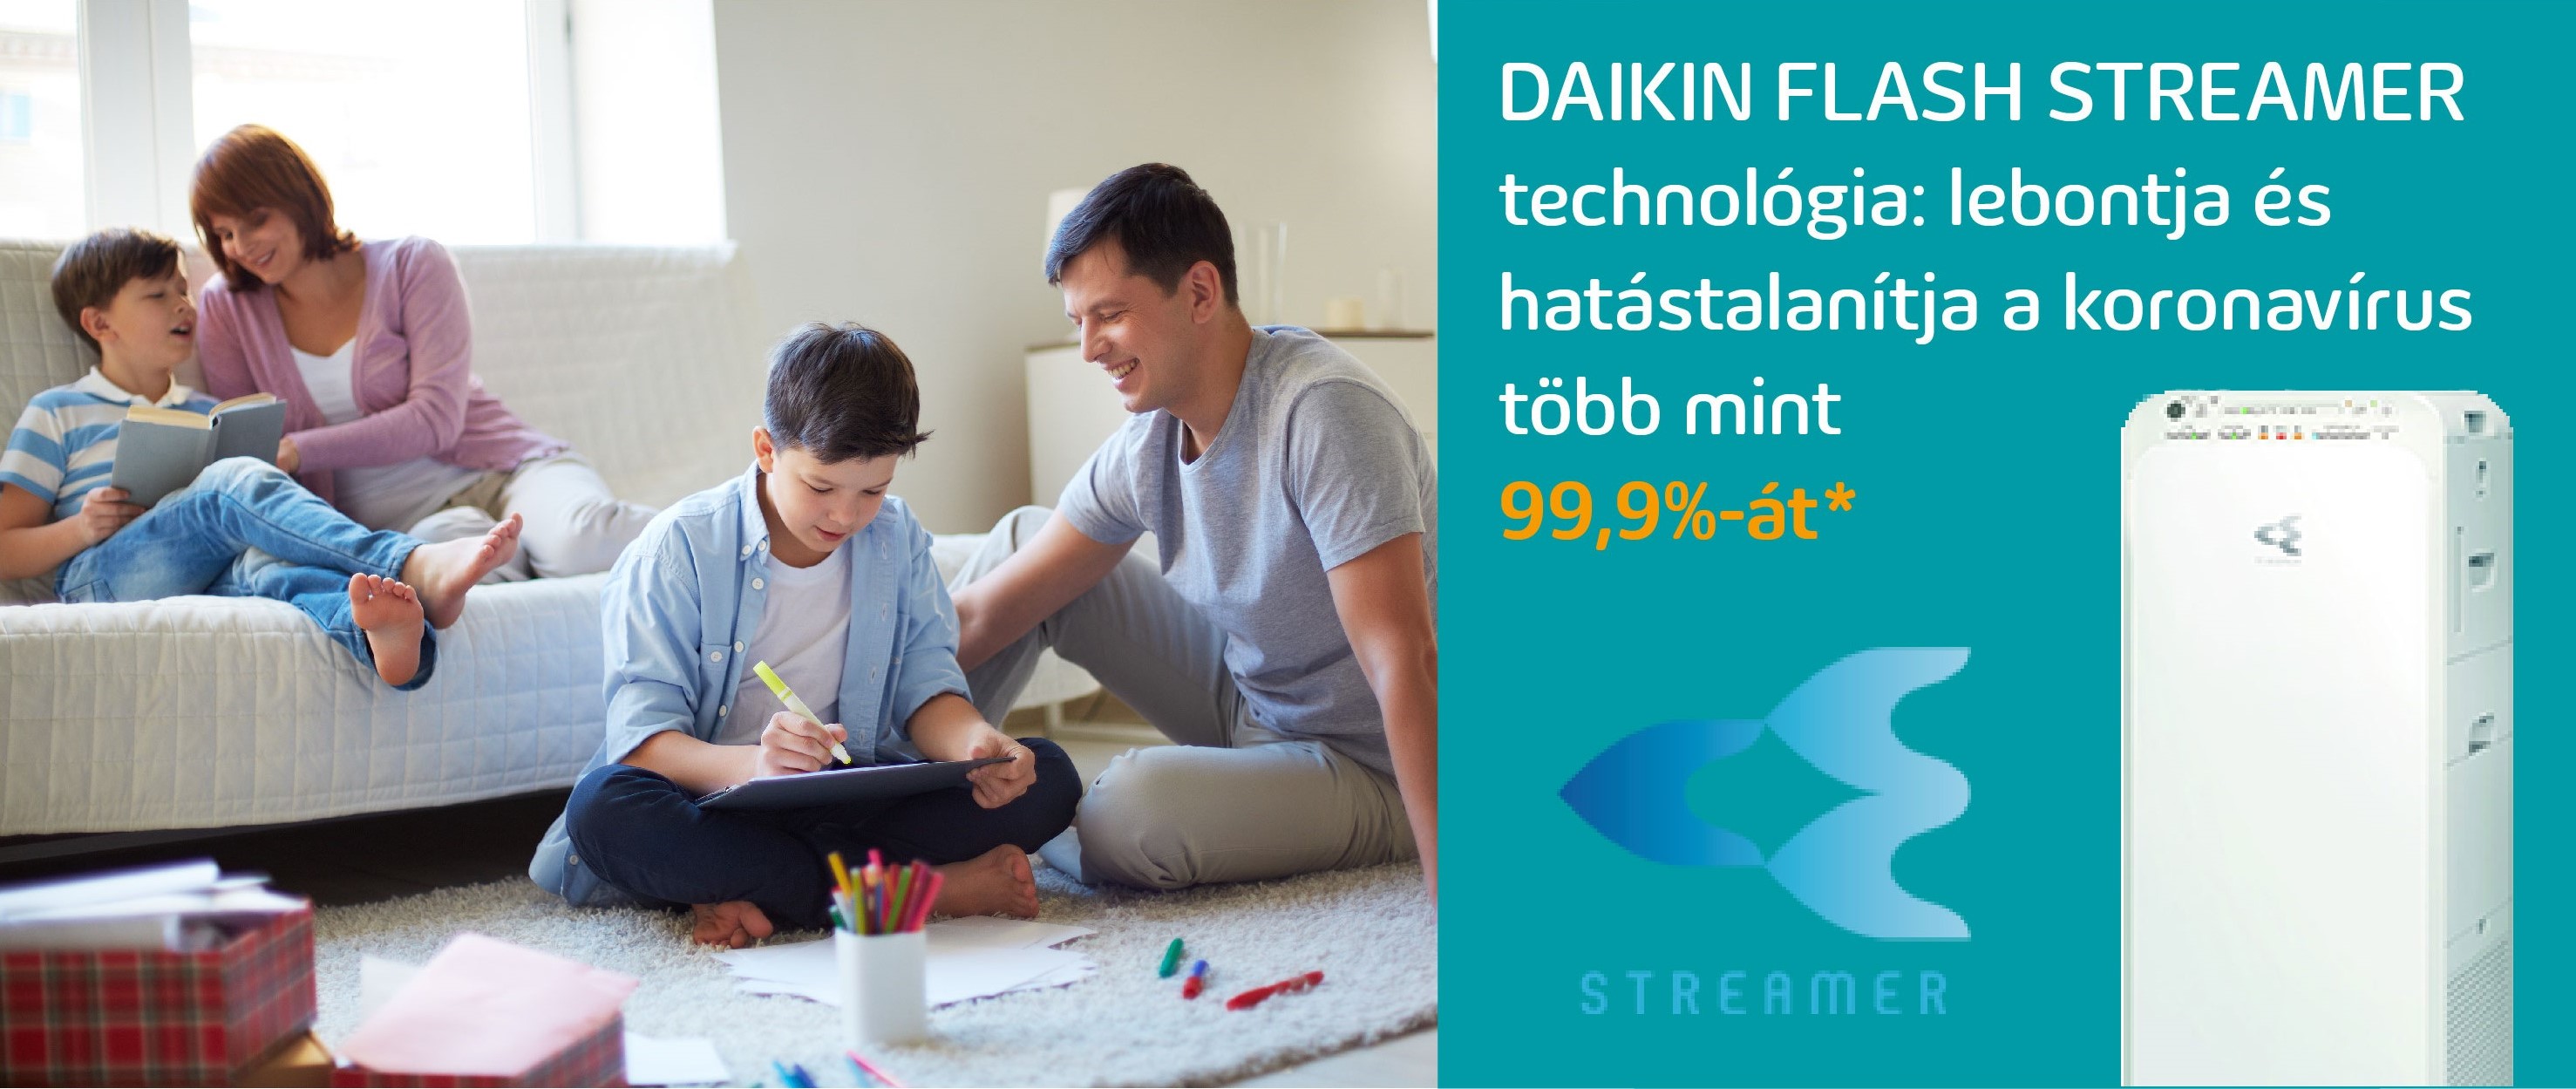 Daikin Flash Streamer technológia